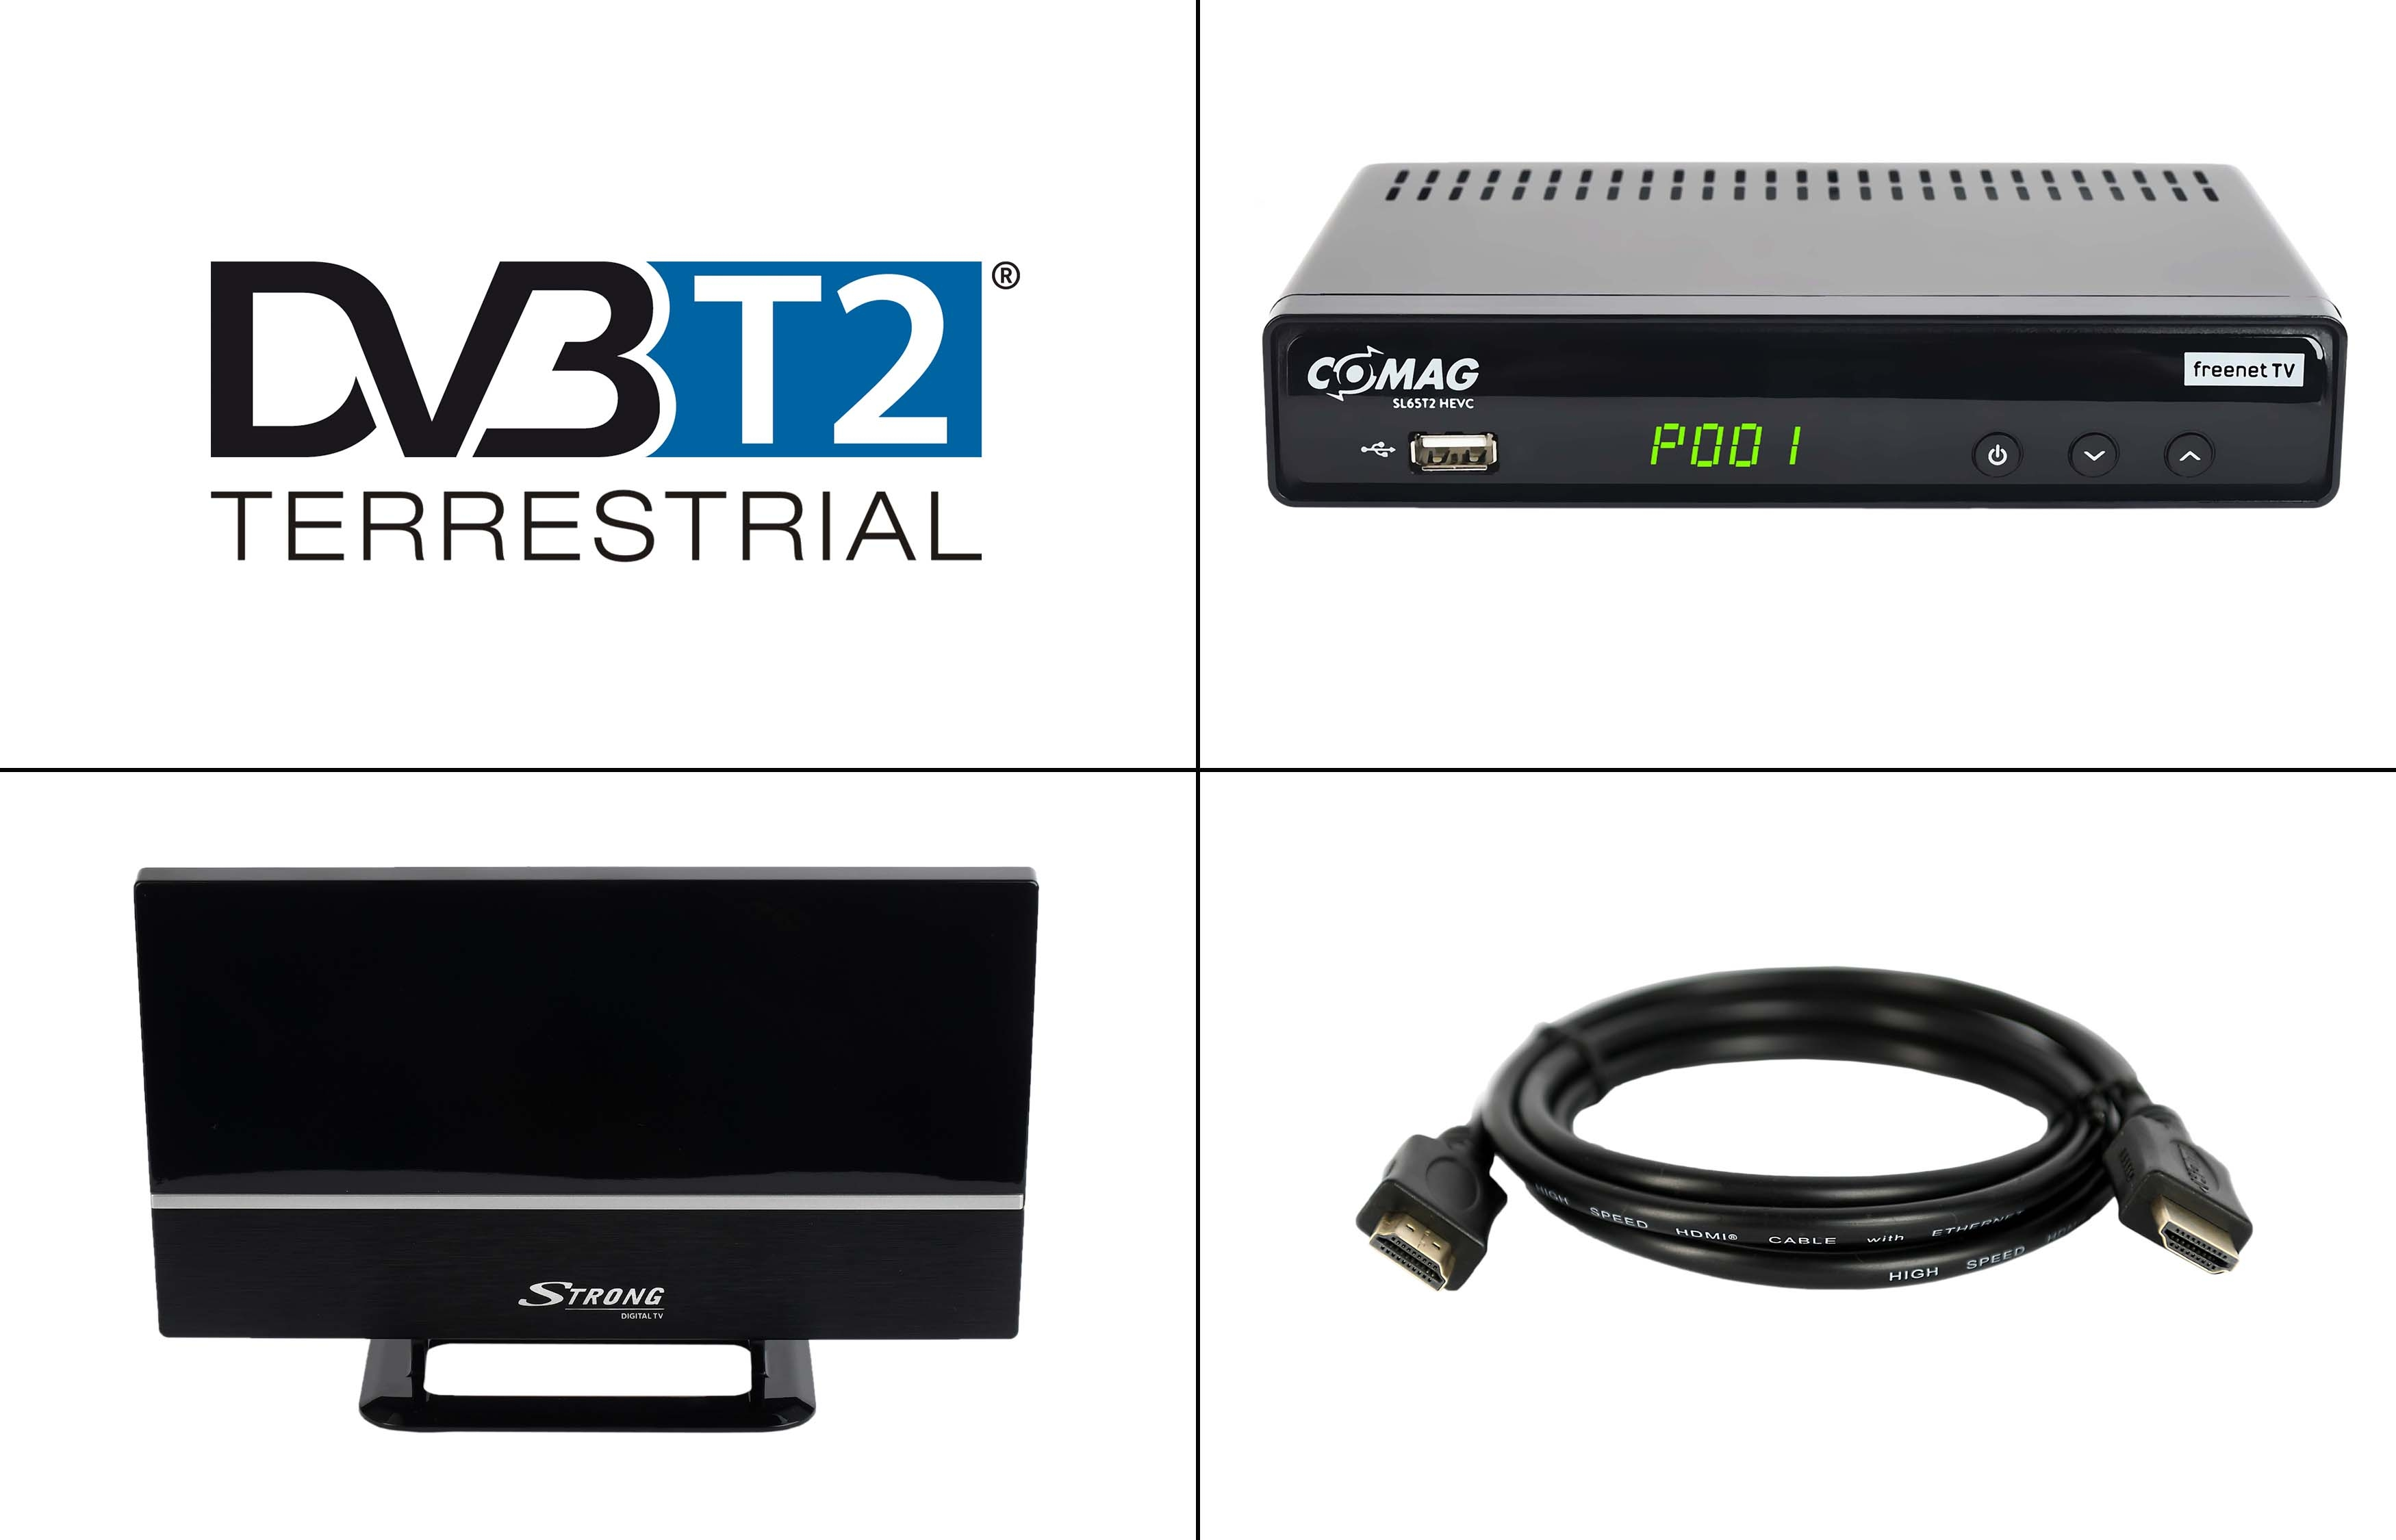 COMAG SL65T2 Home Bundel DVB-T-Receiver (H.265), DVB-T2 DVB-T, PVR-Funktion, (H.264), DVB-T2 schwarz) (HDTV